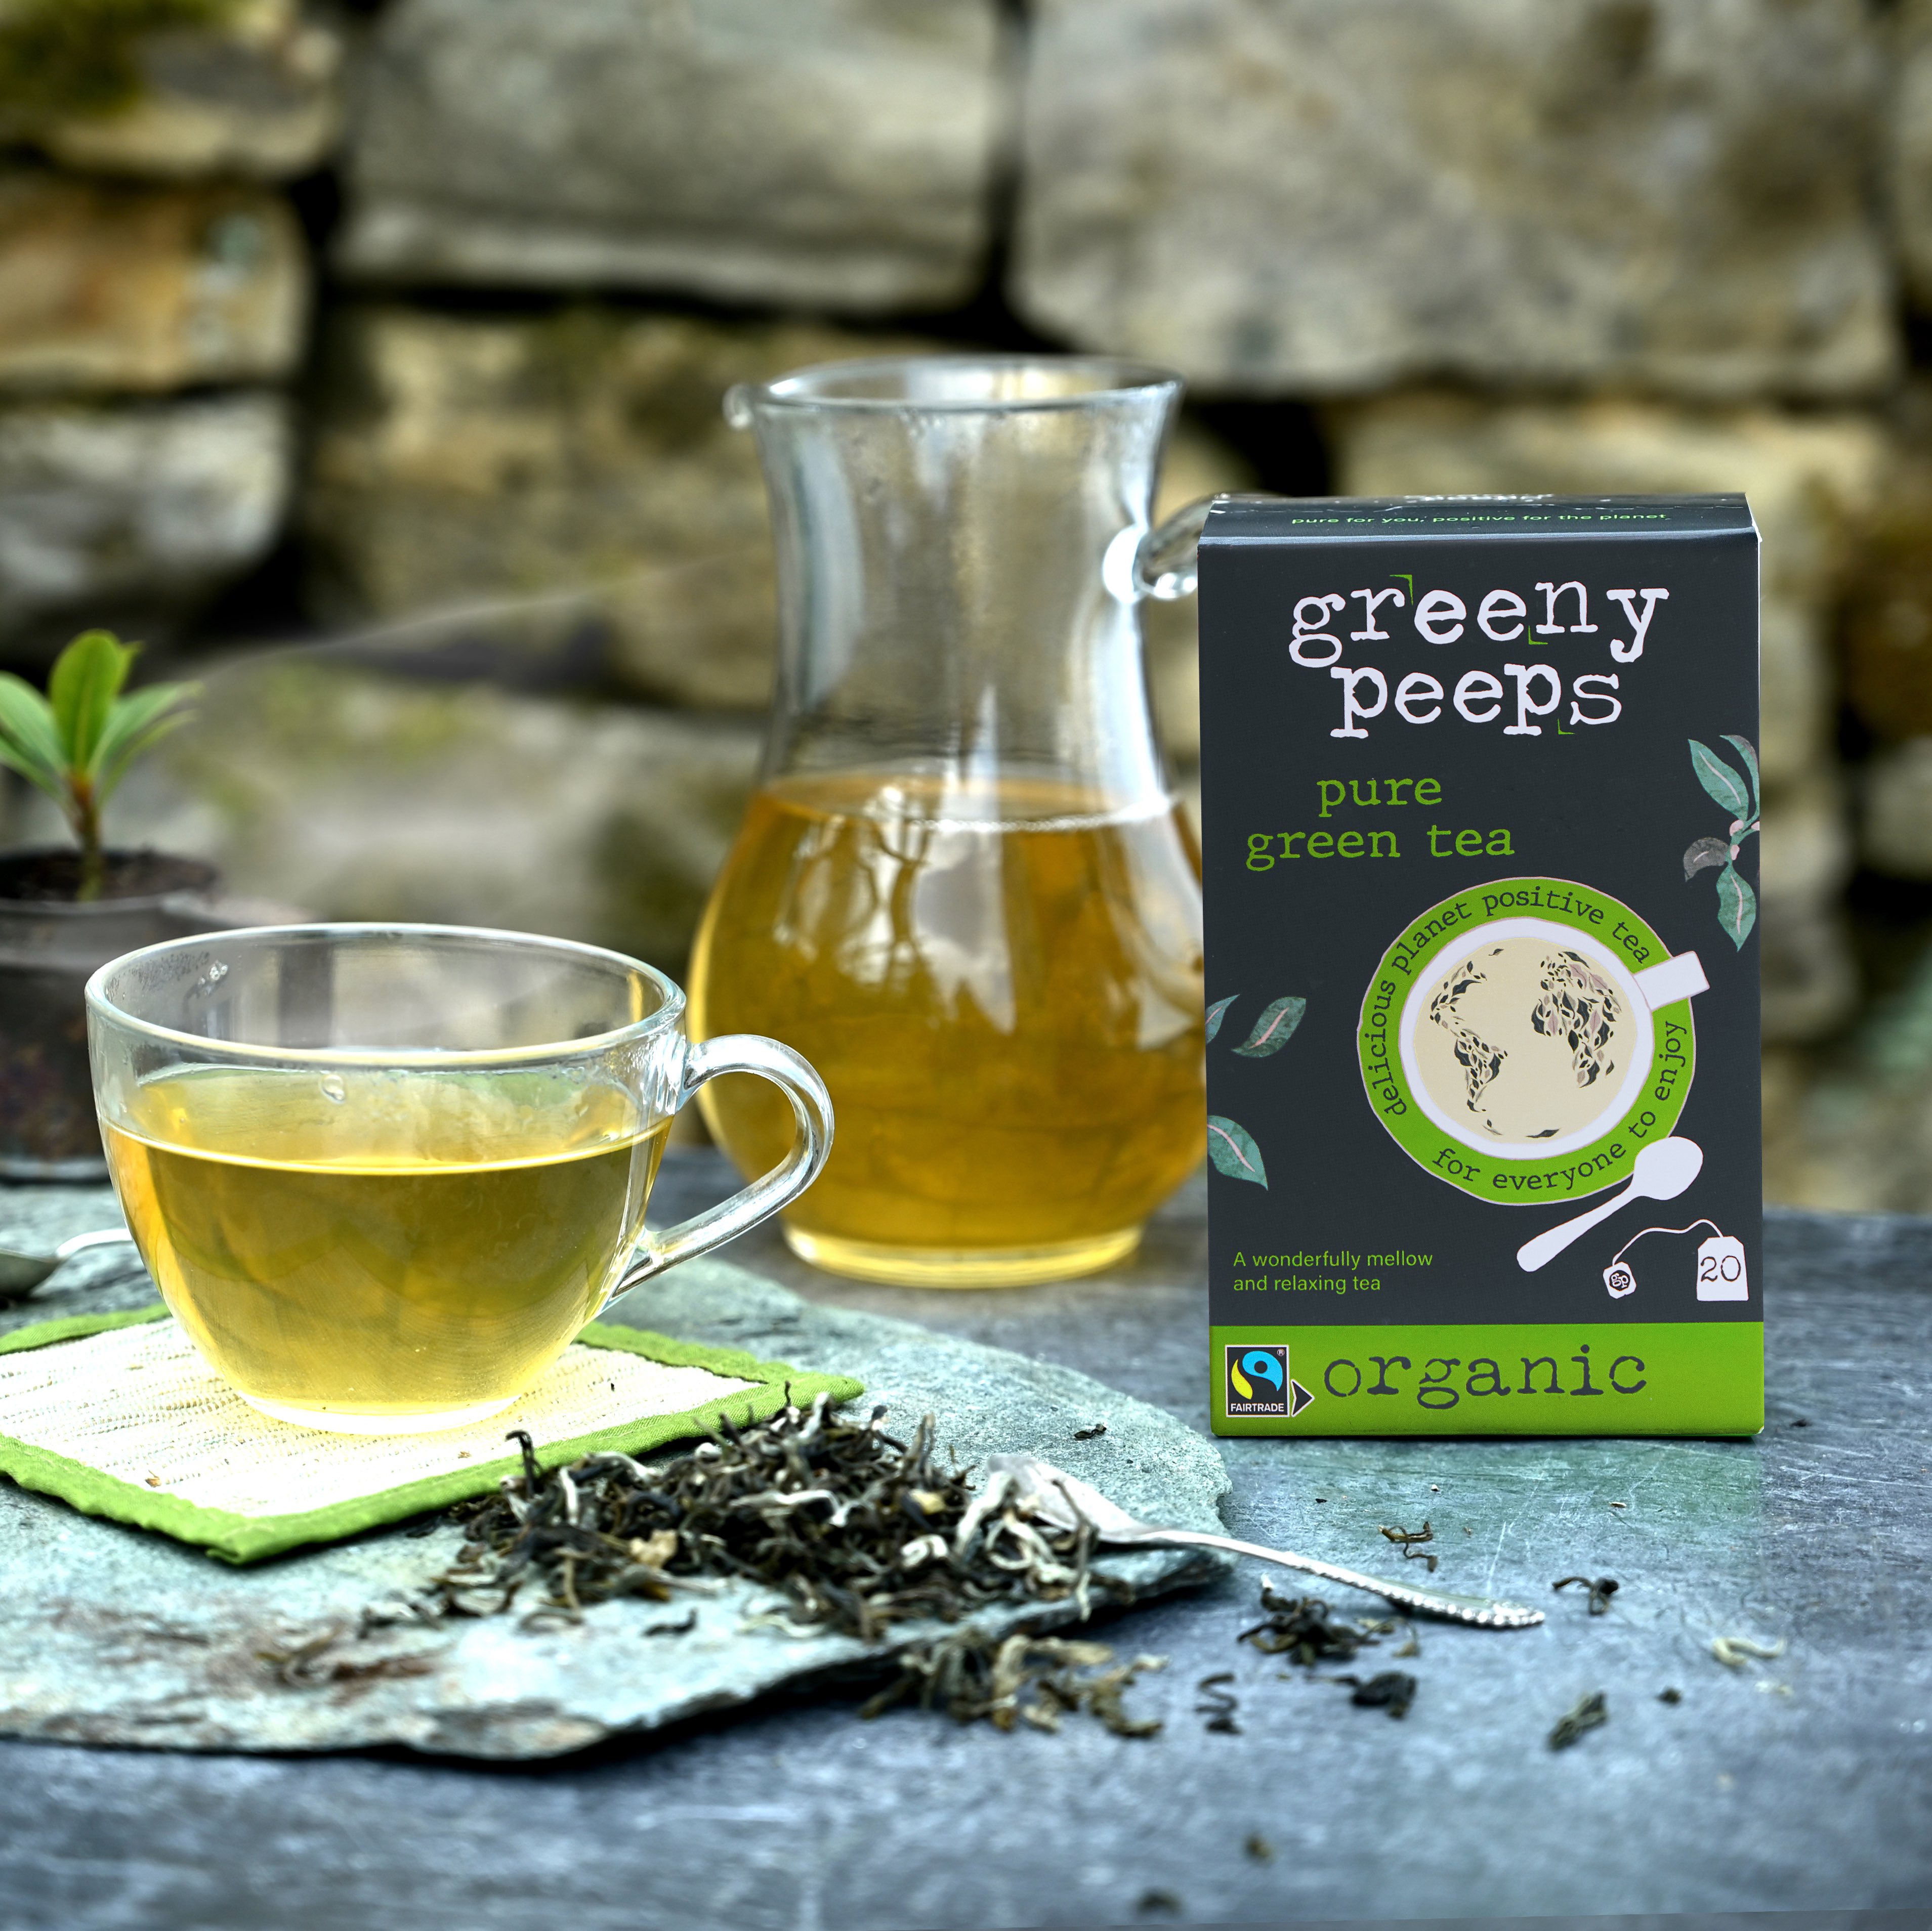 Greenypeeps Pure Green tea